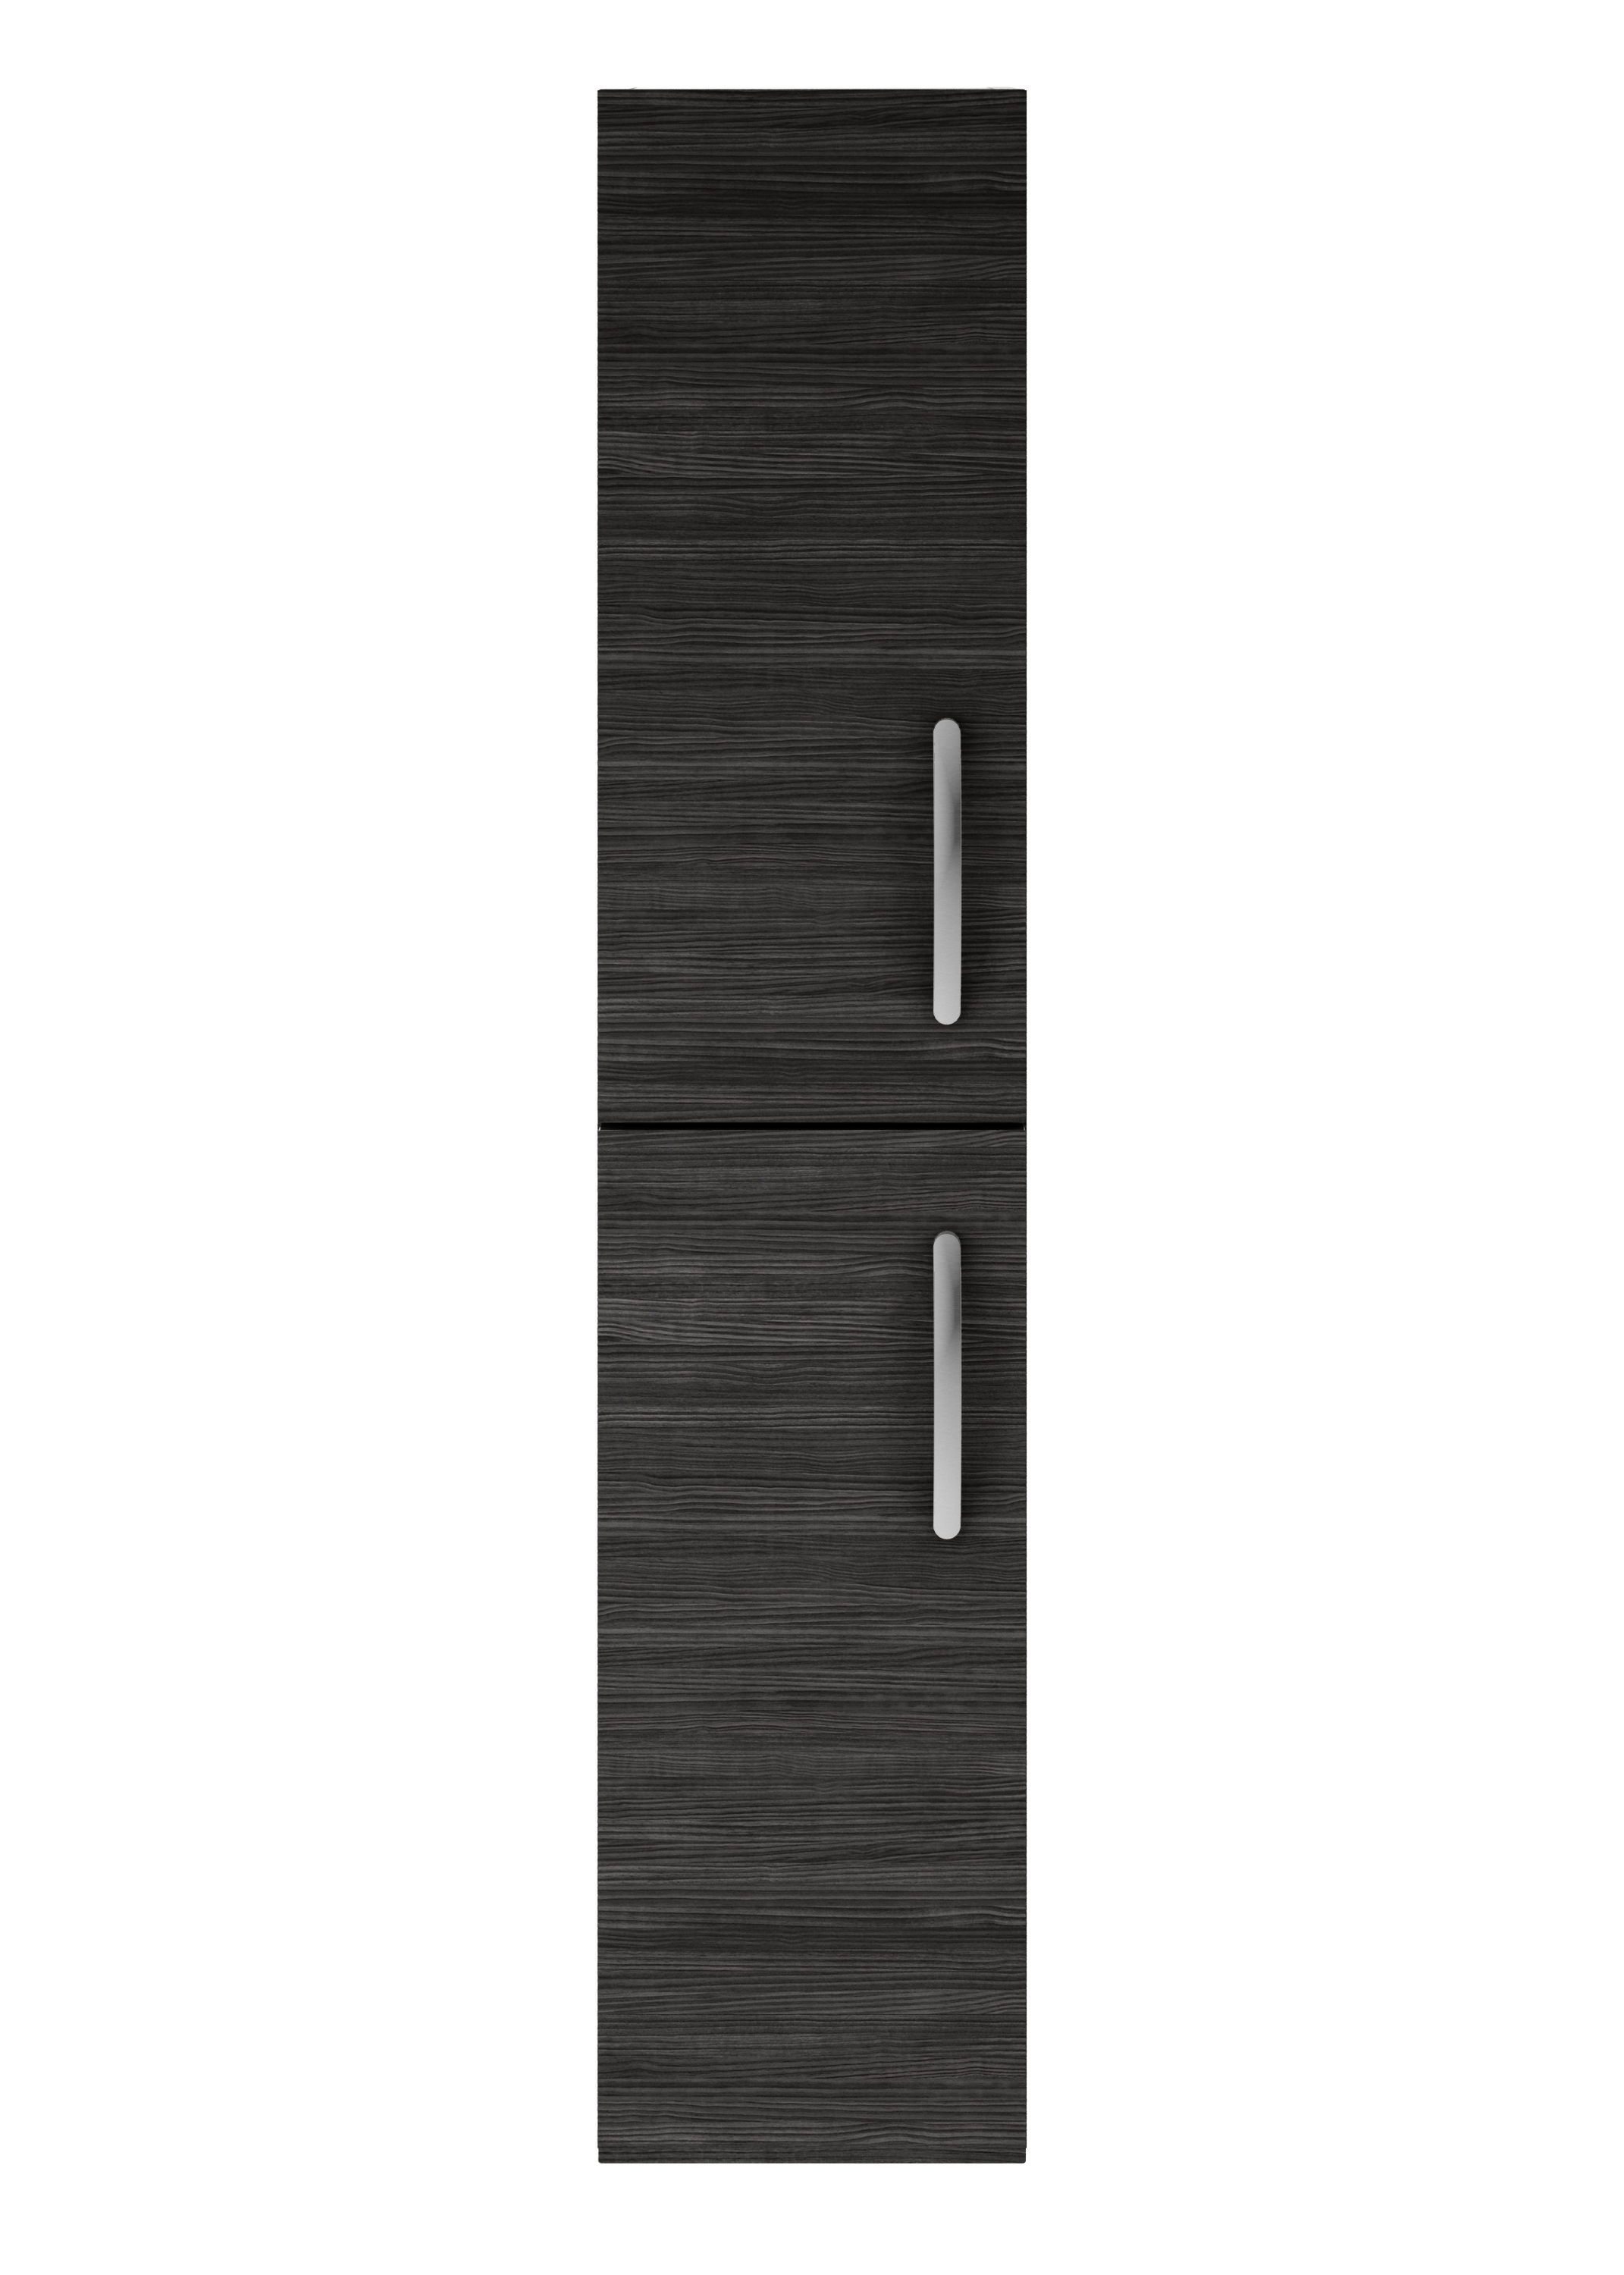 Nuie Athena 2-Door Wall Hung Tall Unit 300mm Wide - Hacienda Black - MOD662 